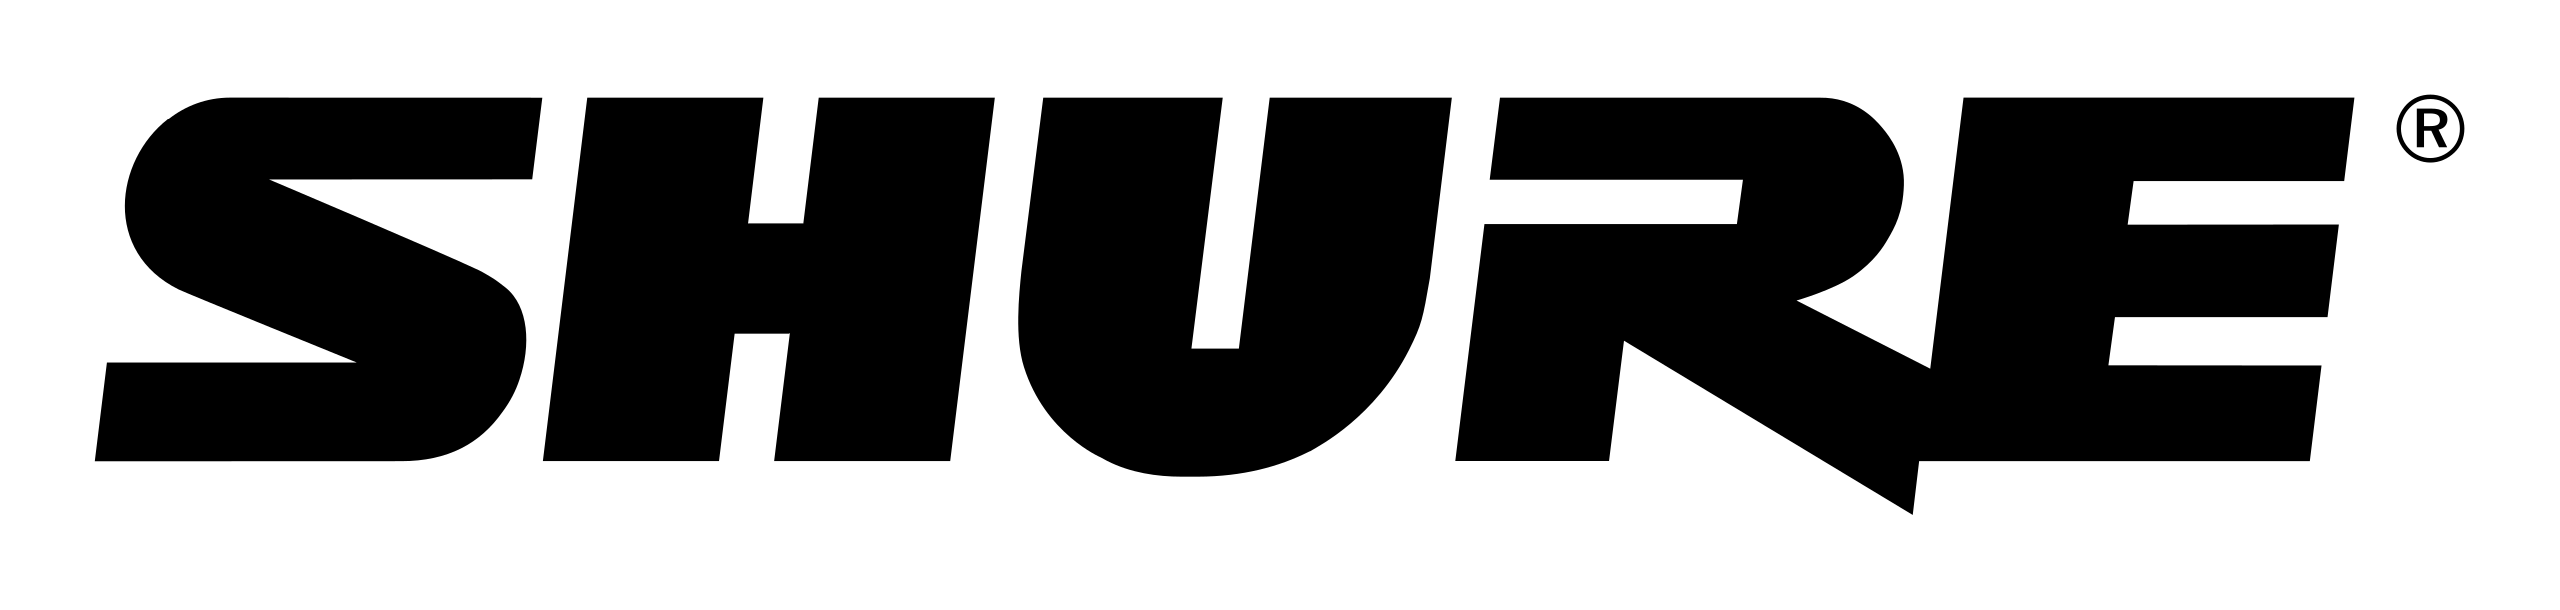 Vendor - Shure Logo